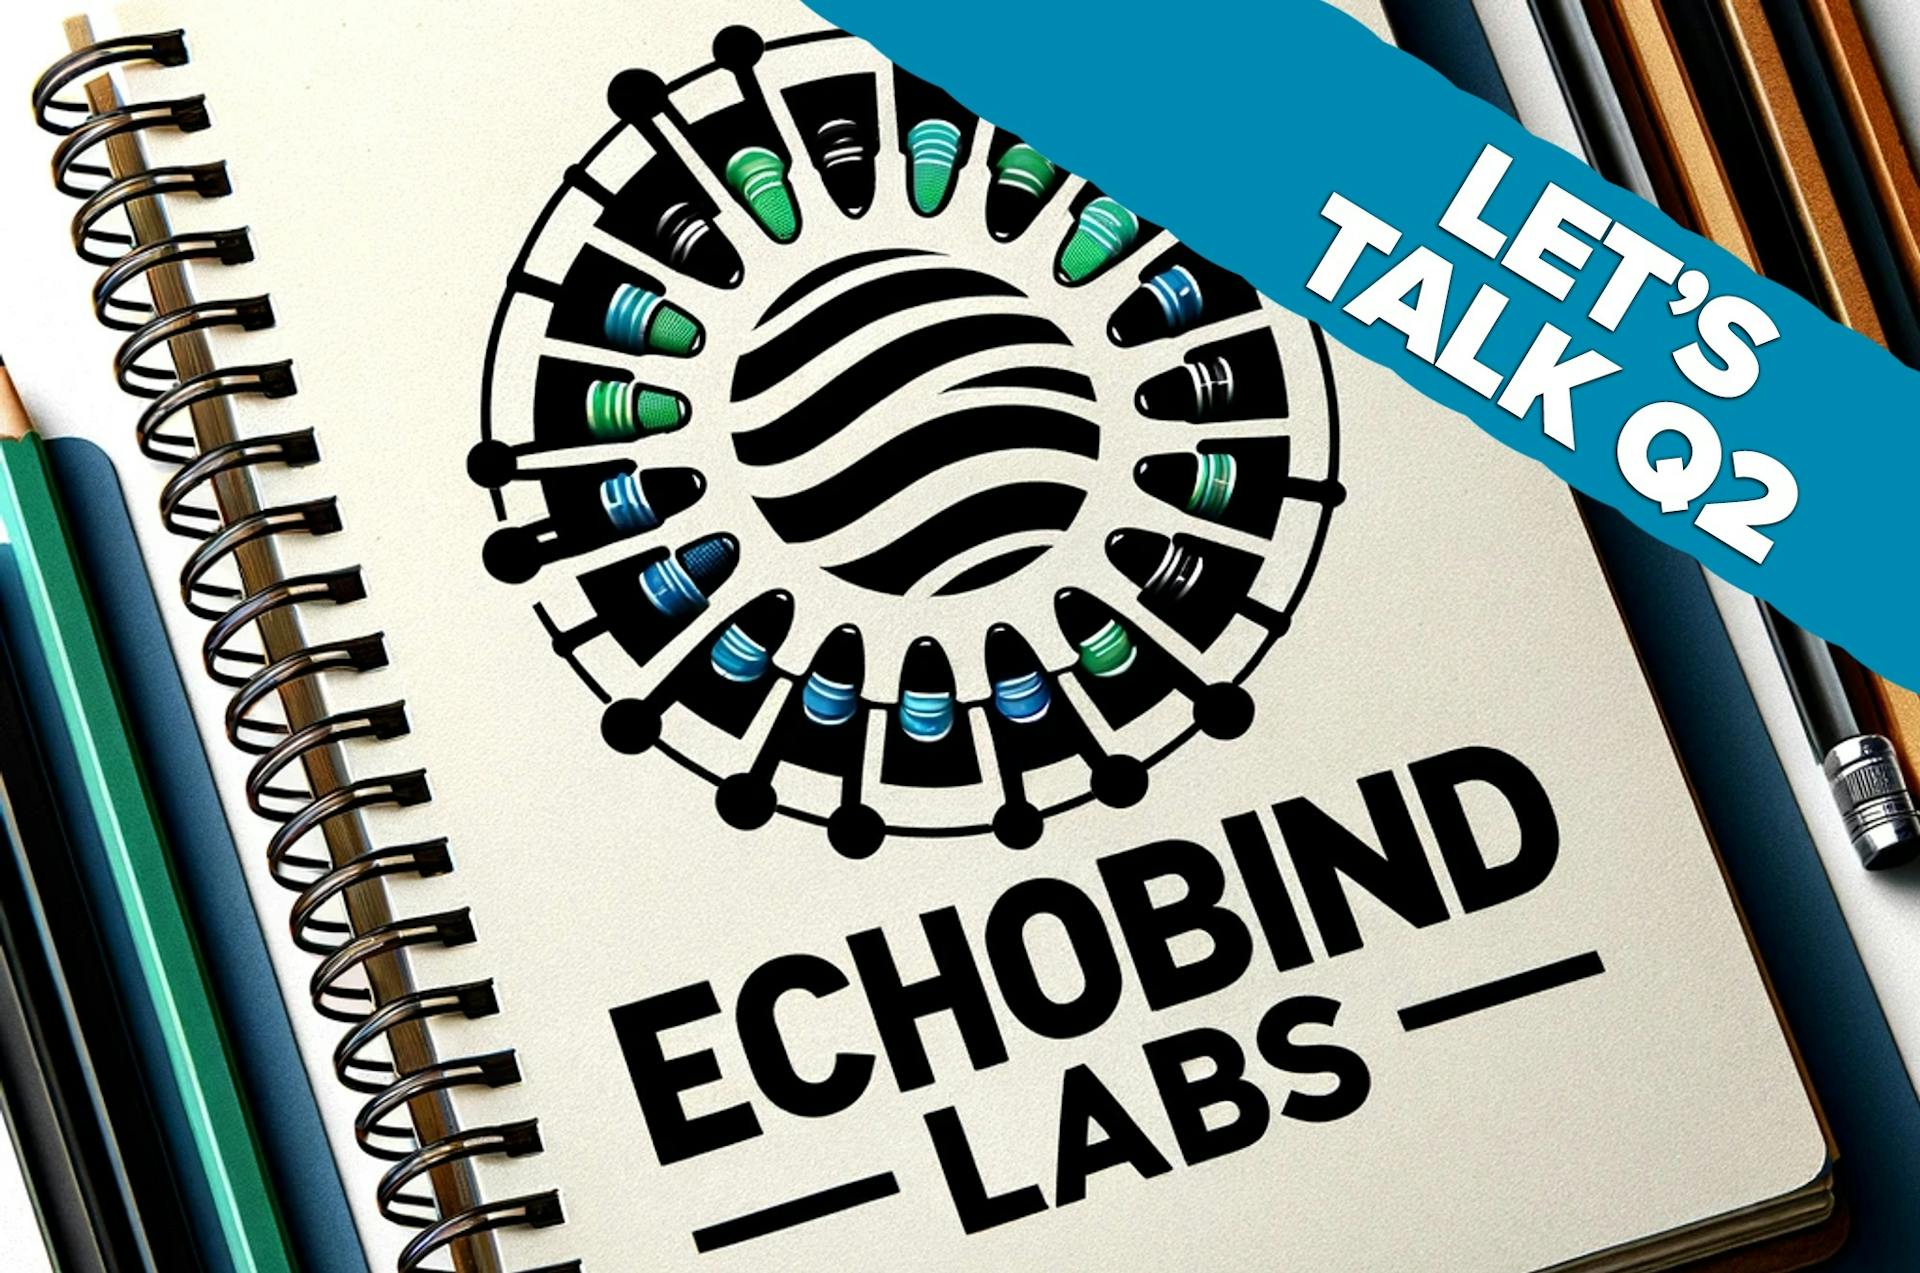 Echobind Labs Update: Let's Talk Q2